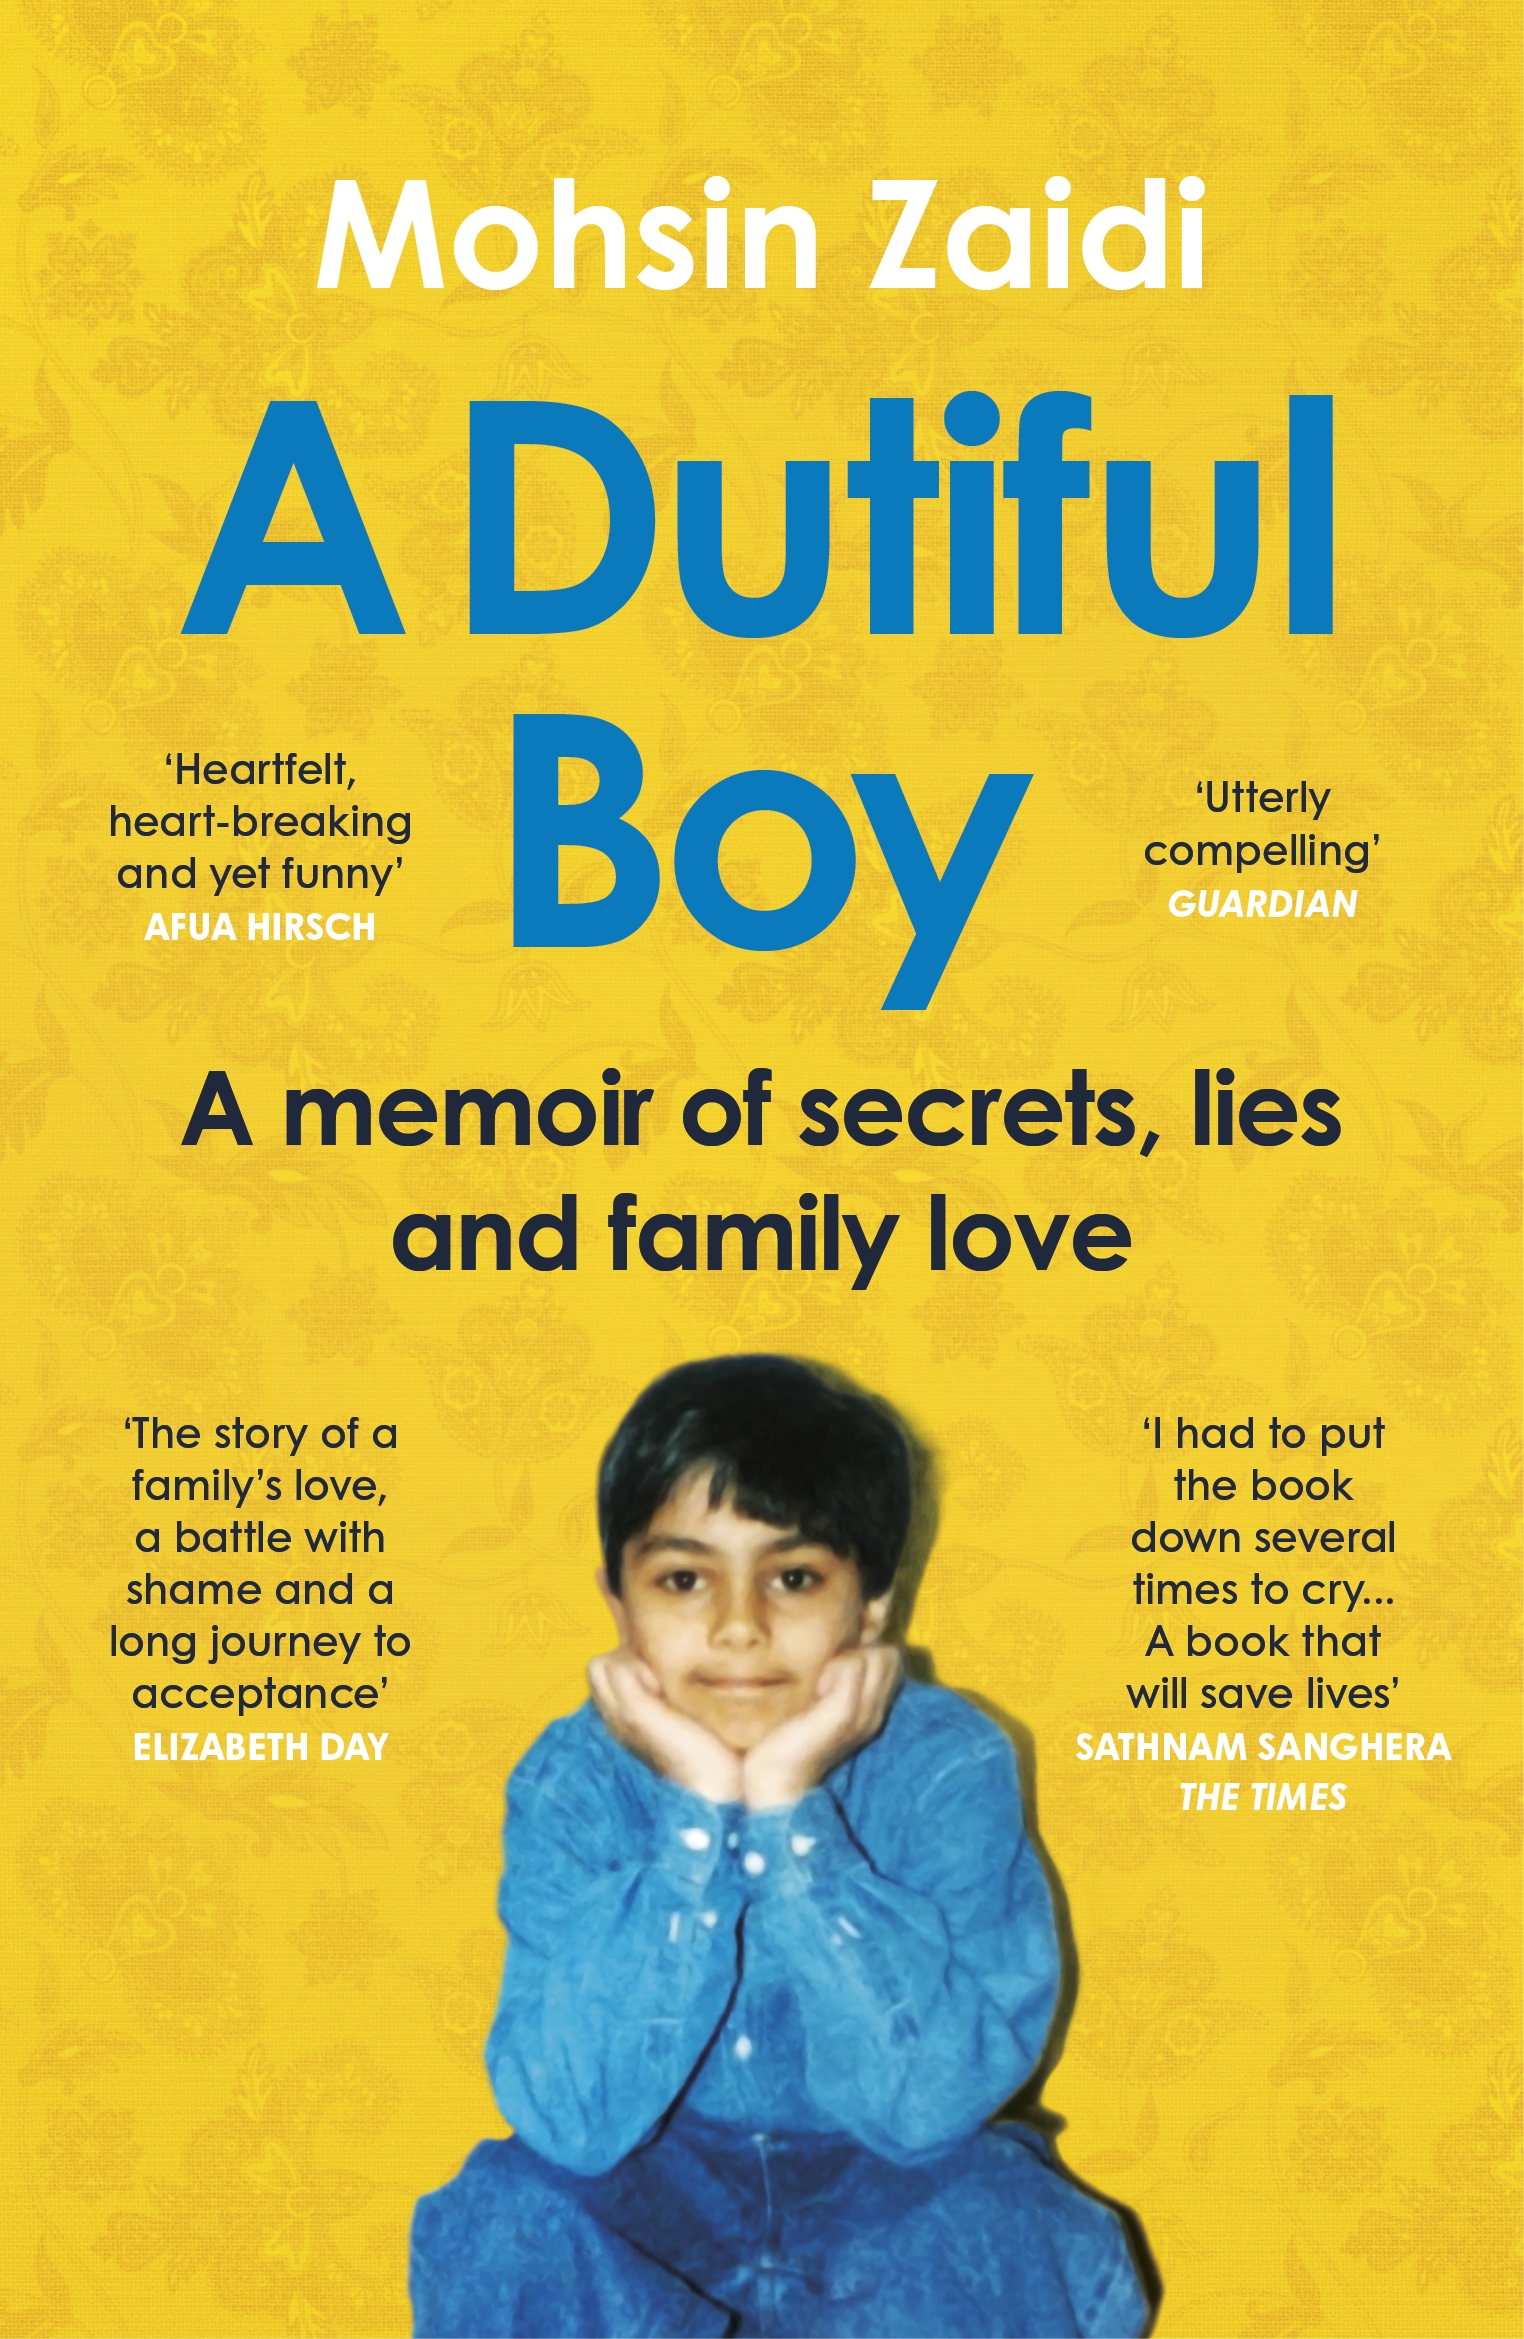 A dutiful boy paperback finished a dutiful boy: a memoir of secrets, lies and family love